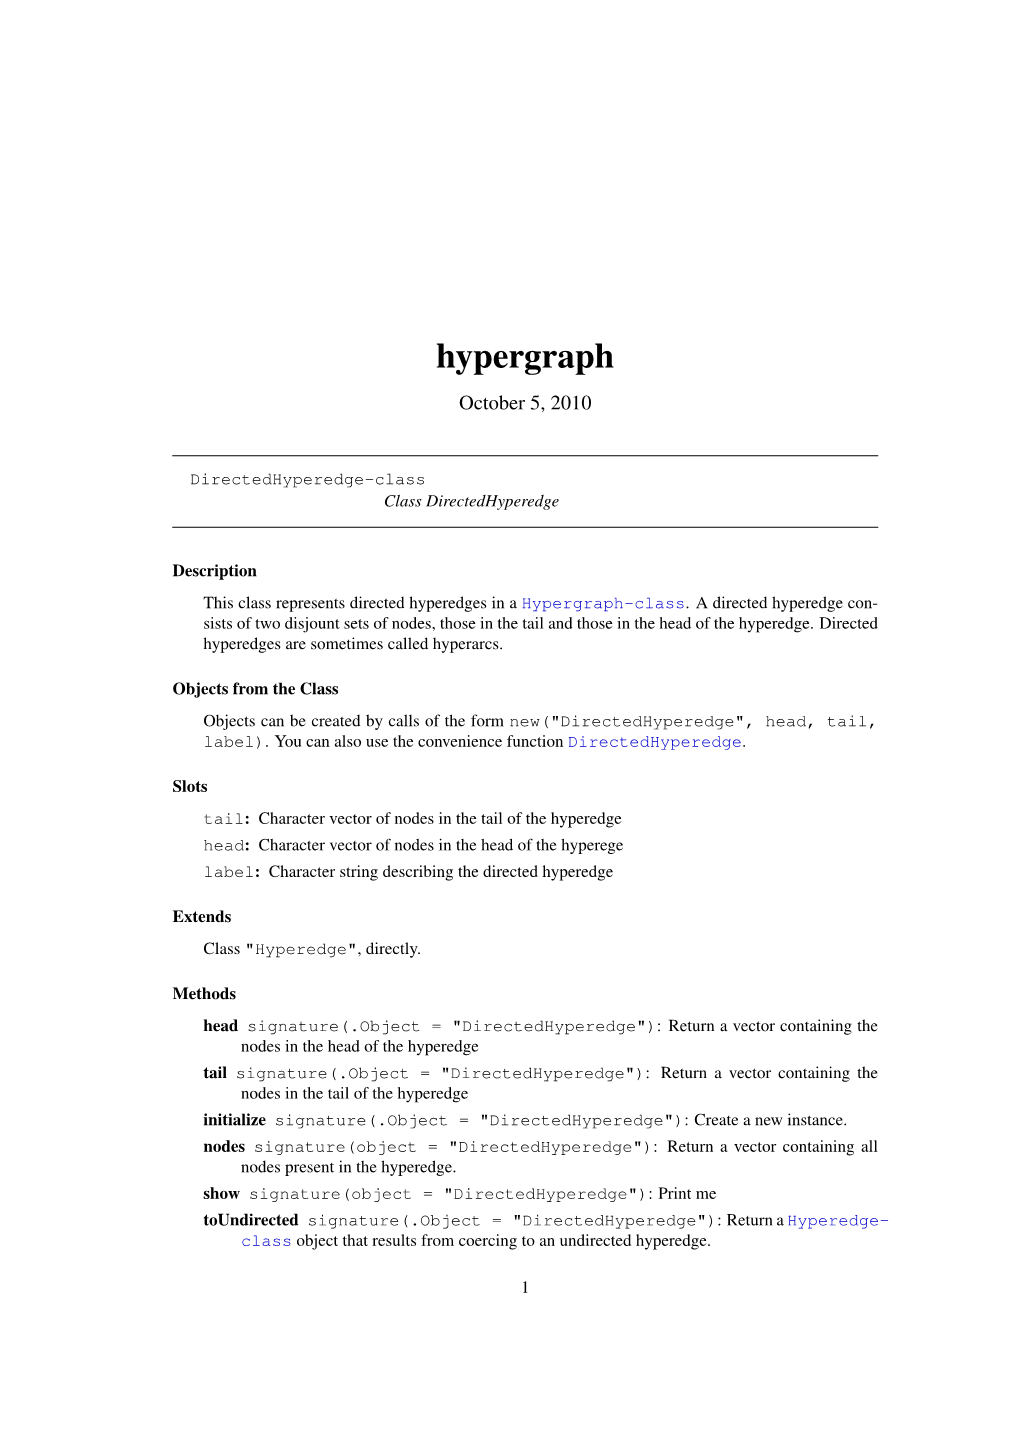 Hypergraph October 5, 2010